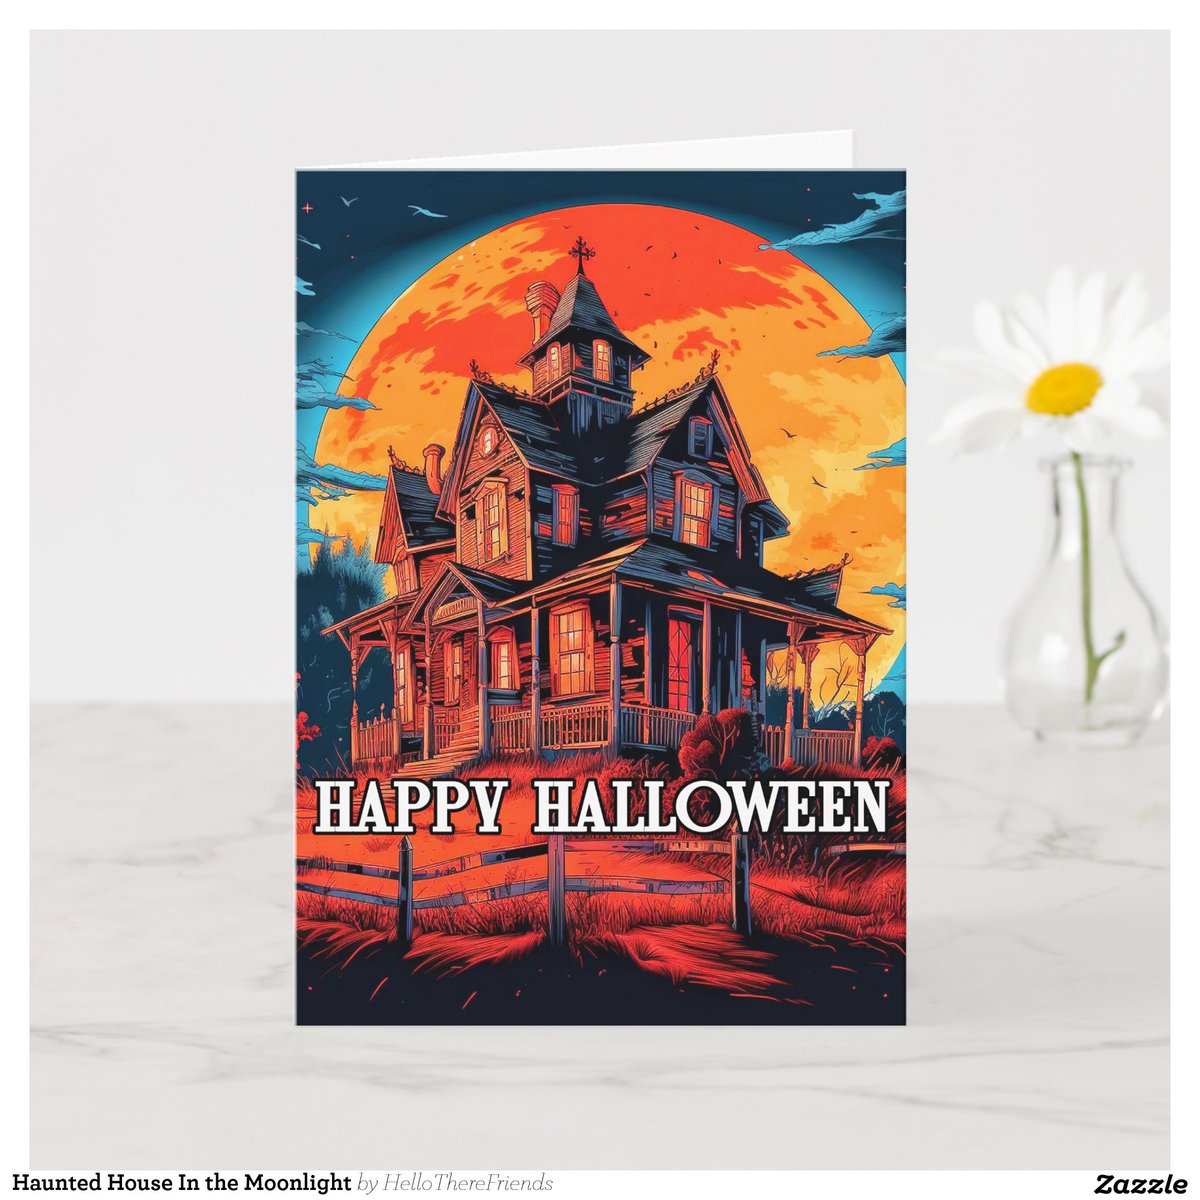 Haunted House In the Moonlight Card→zazzle.com/z/f9kfsmiy?rf=…

#GreetingCards #HalloweenCards #HappyHalloween #Pumpkins #Horror #HalloweenArt #TrickOrTreat #HauntedHouse #HappyHalloweenCards #Macabre